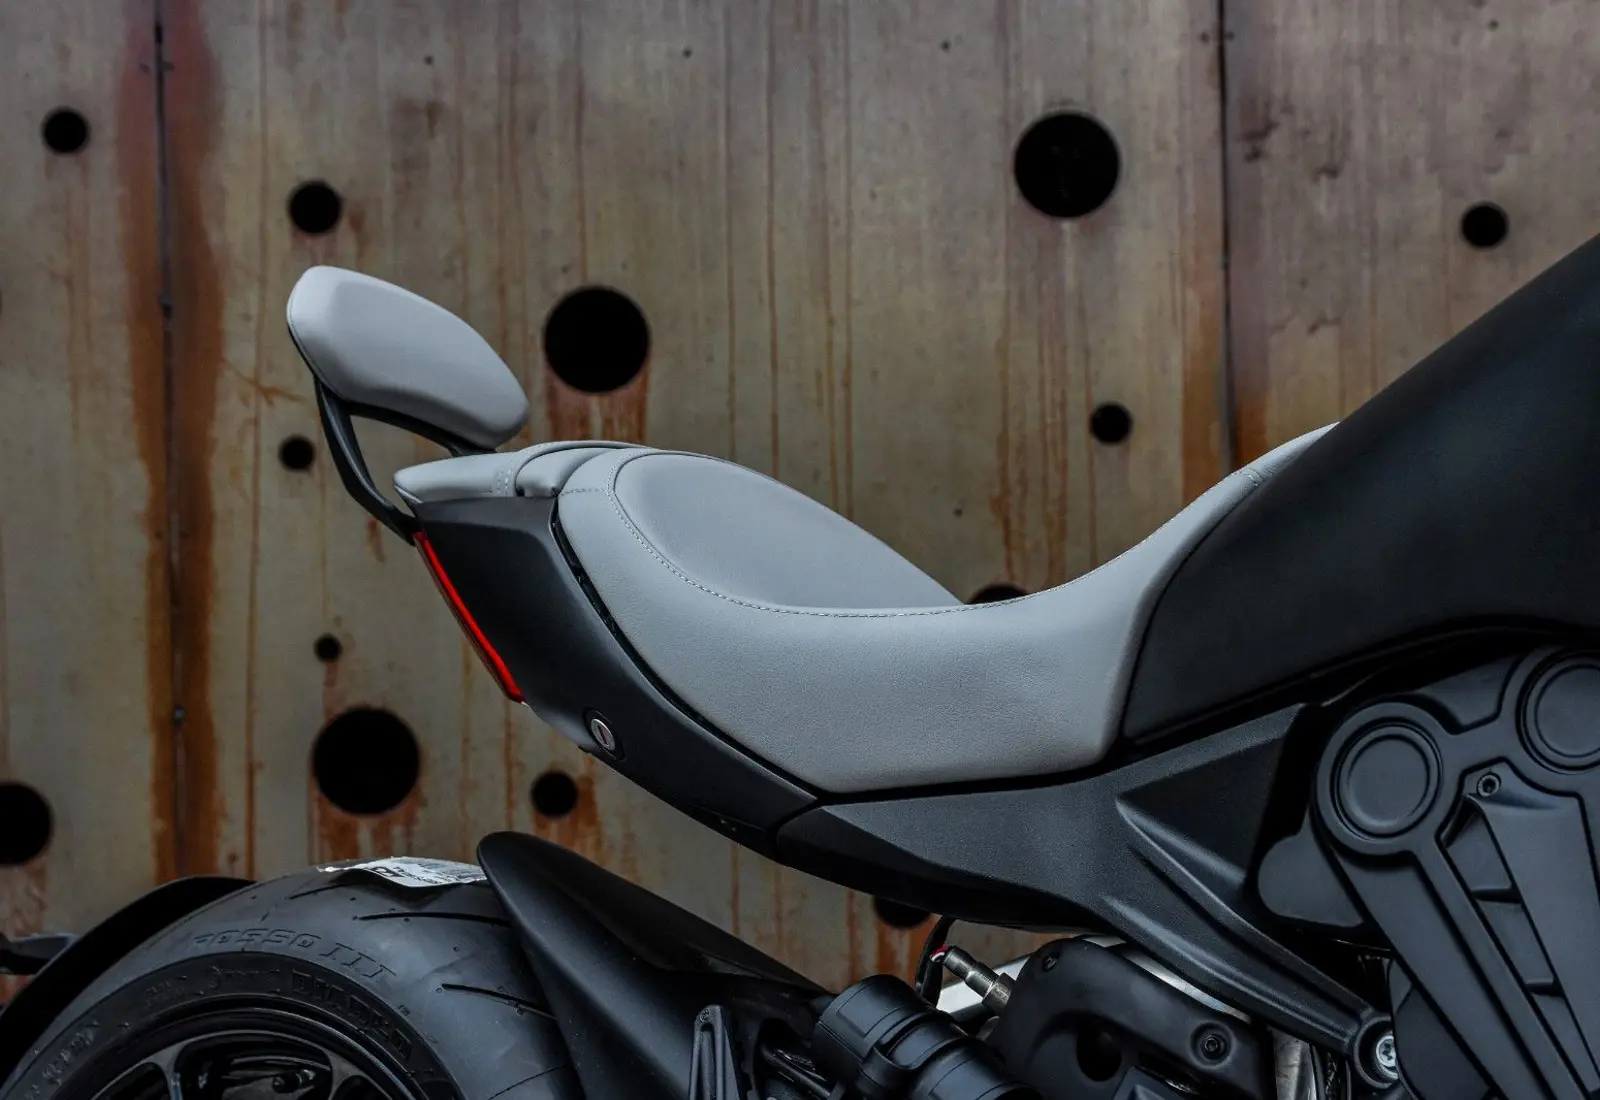 Ducati X-Diavel Nera * POLTRONA FRAU * 1 OF 500 * LIMITED ED - 44495